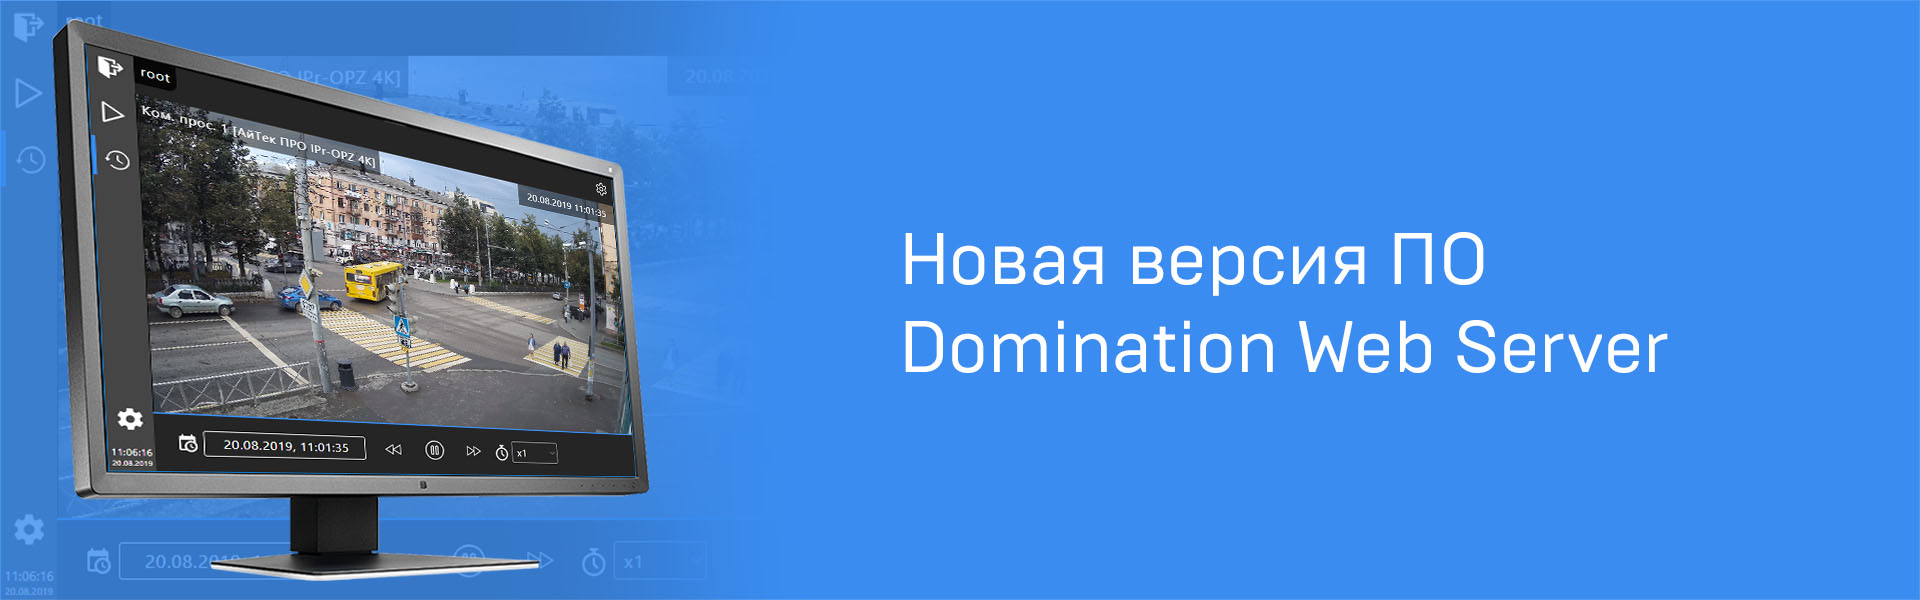 Новая версия ПО Domination Web Server.jpg